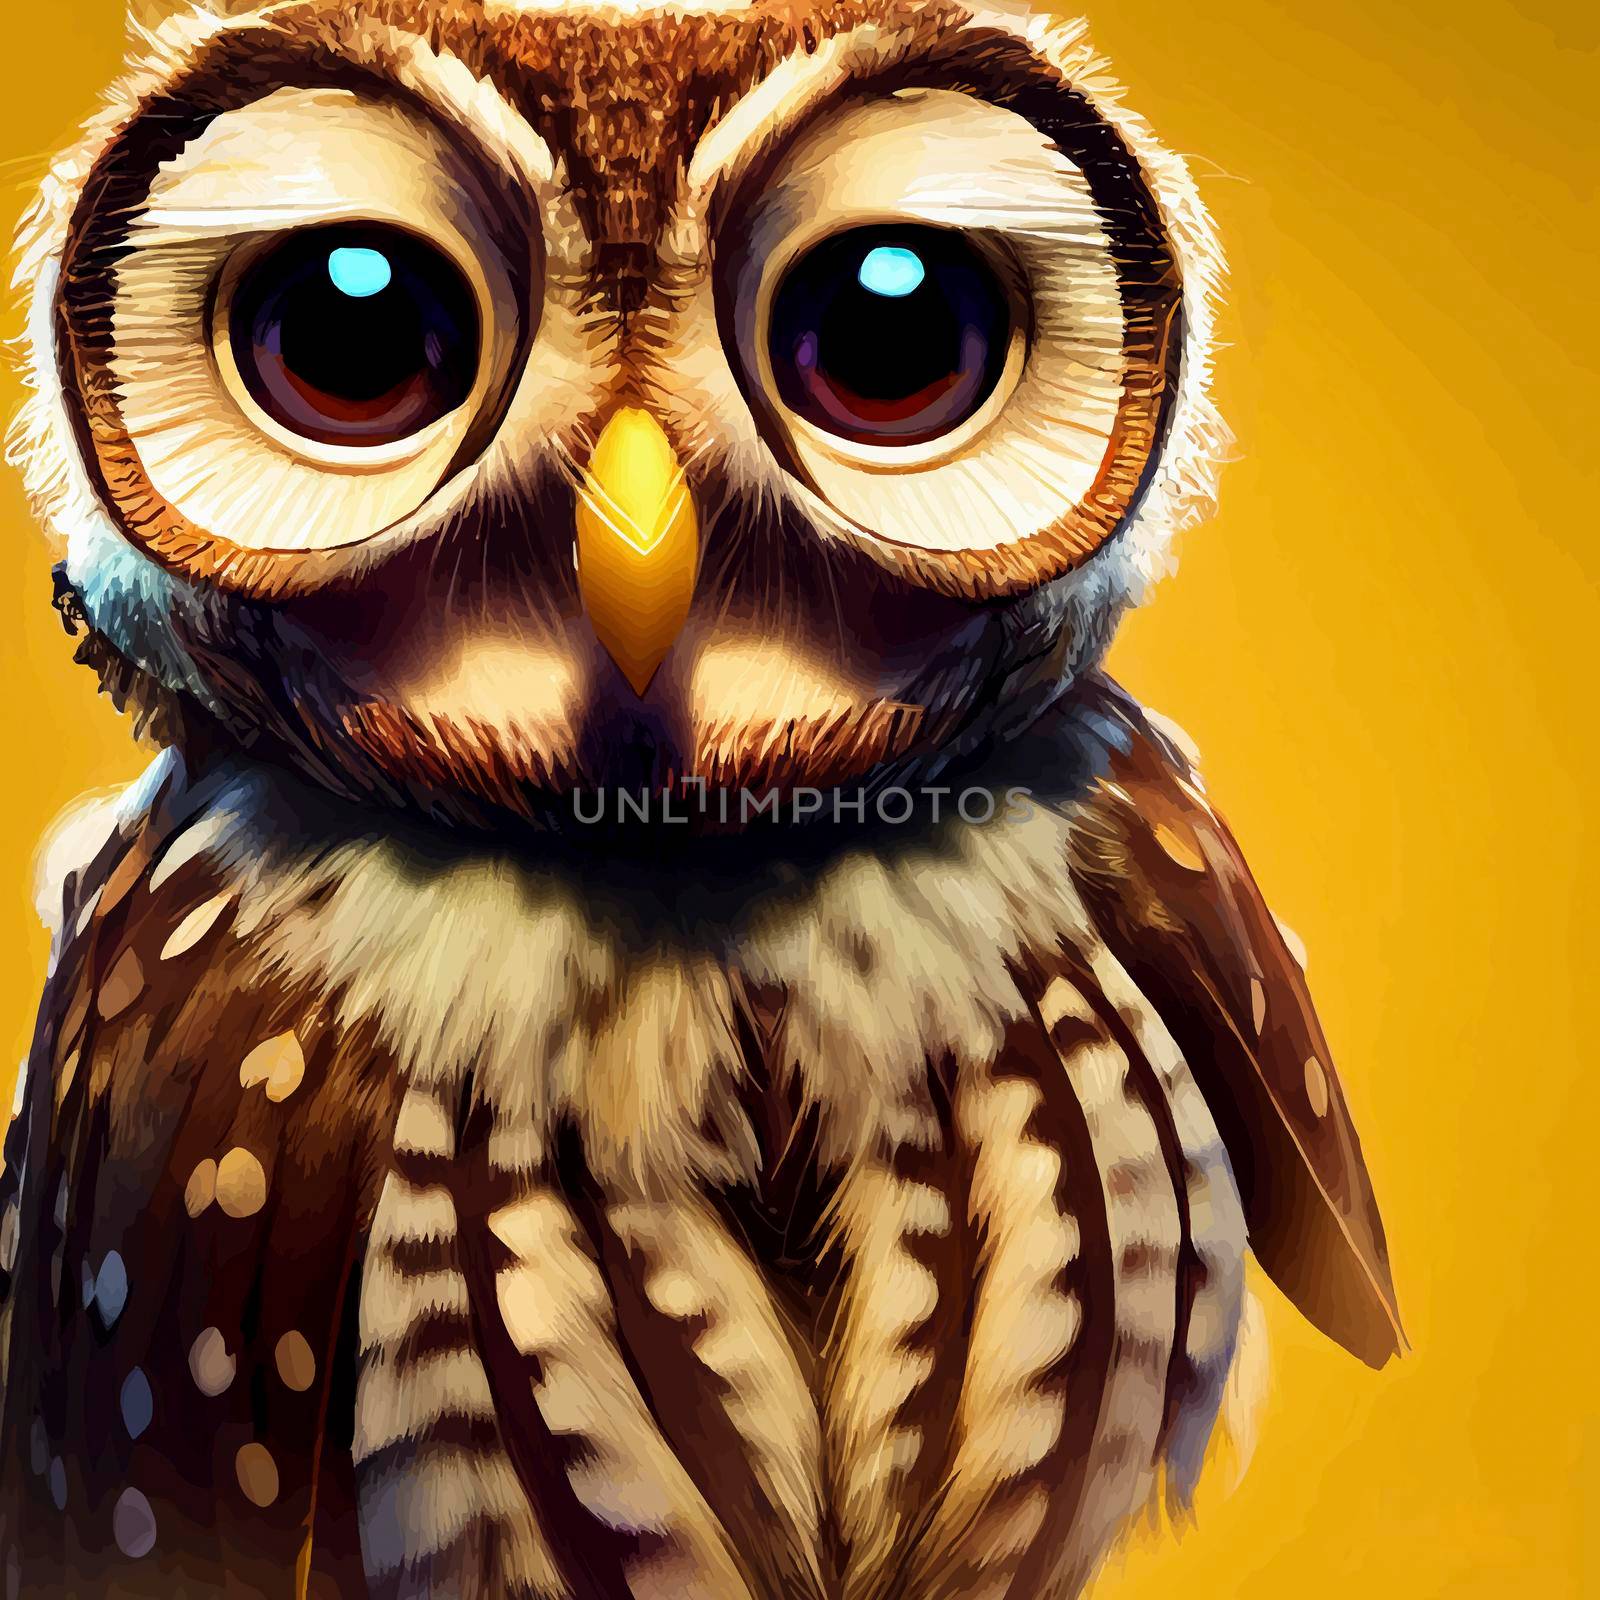 animated illustration of a cute owl, animated owl portrait.